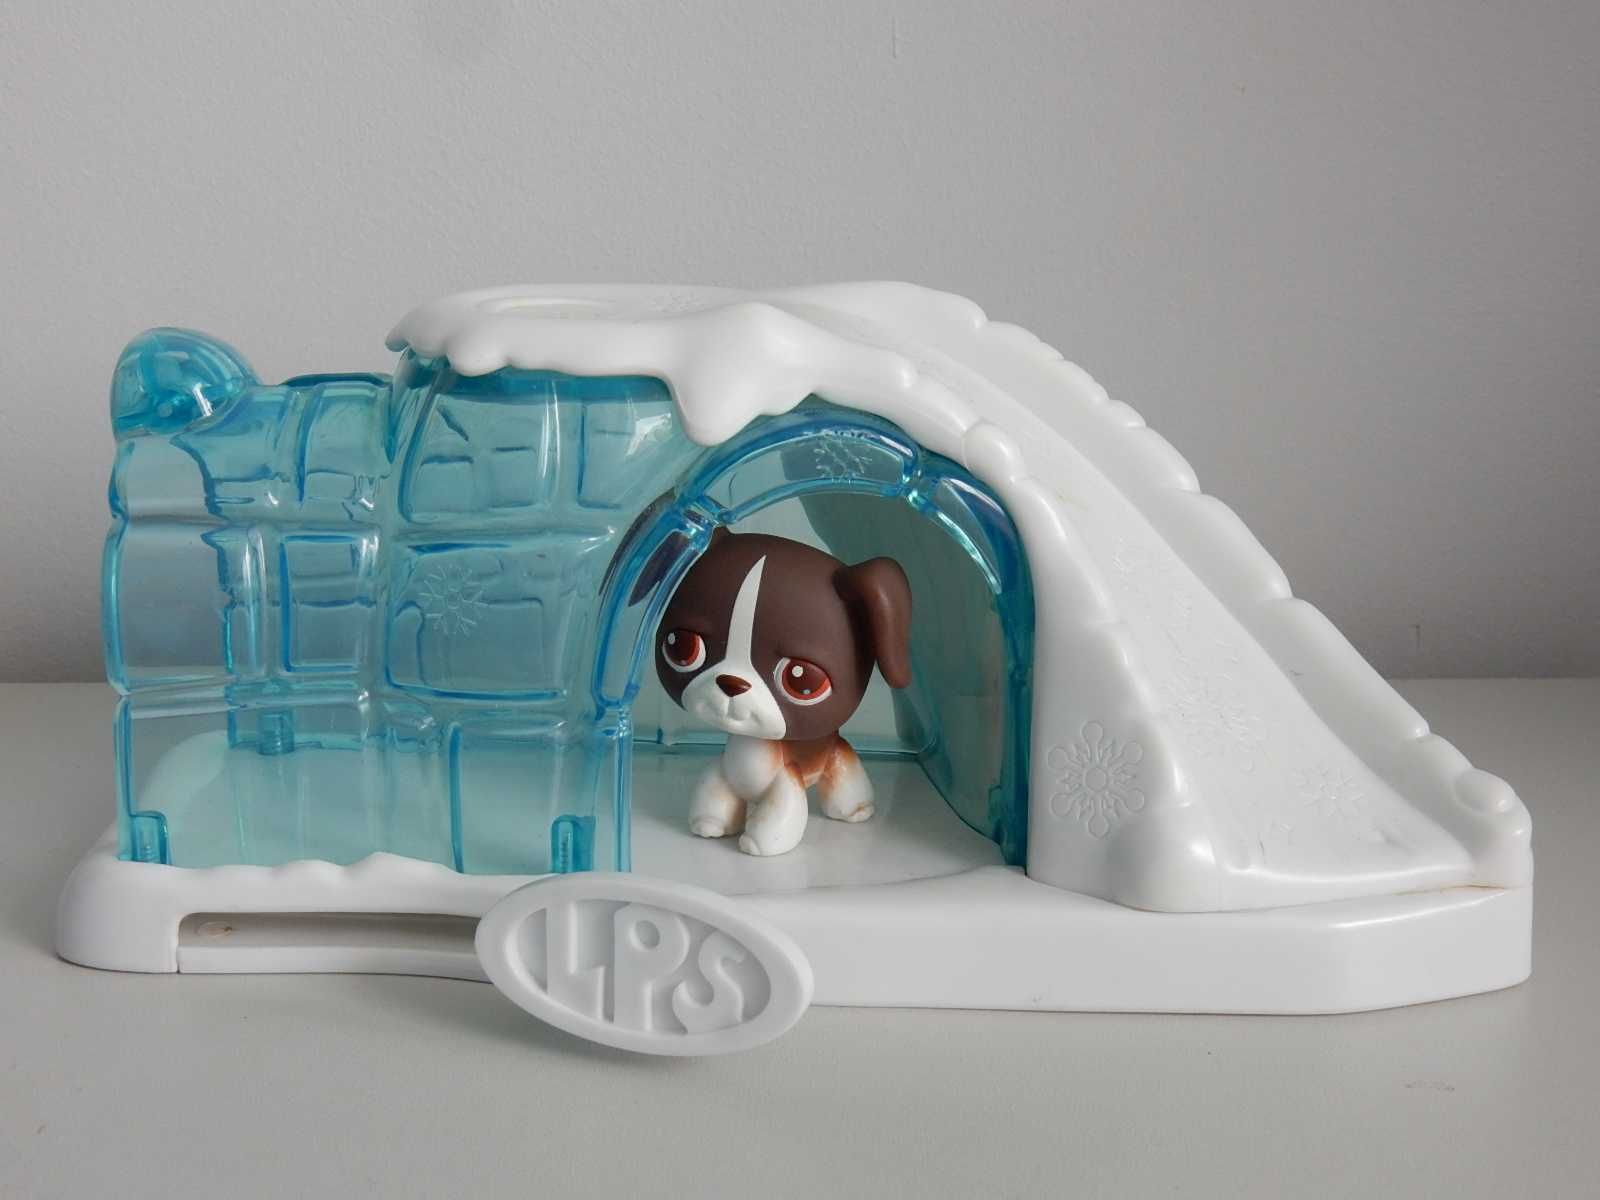 Hasbro Littlest Pet Shop Igloo, LPS domek lodowy 2005